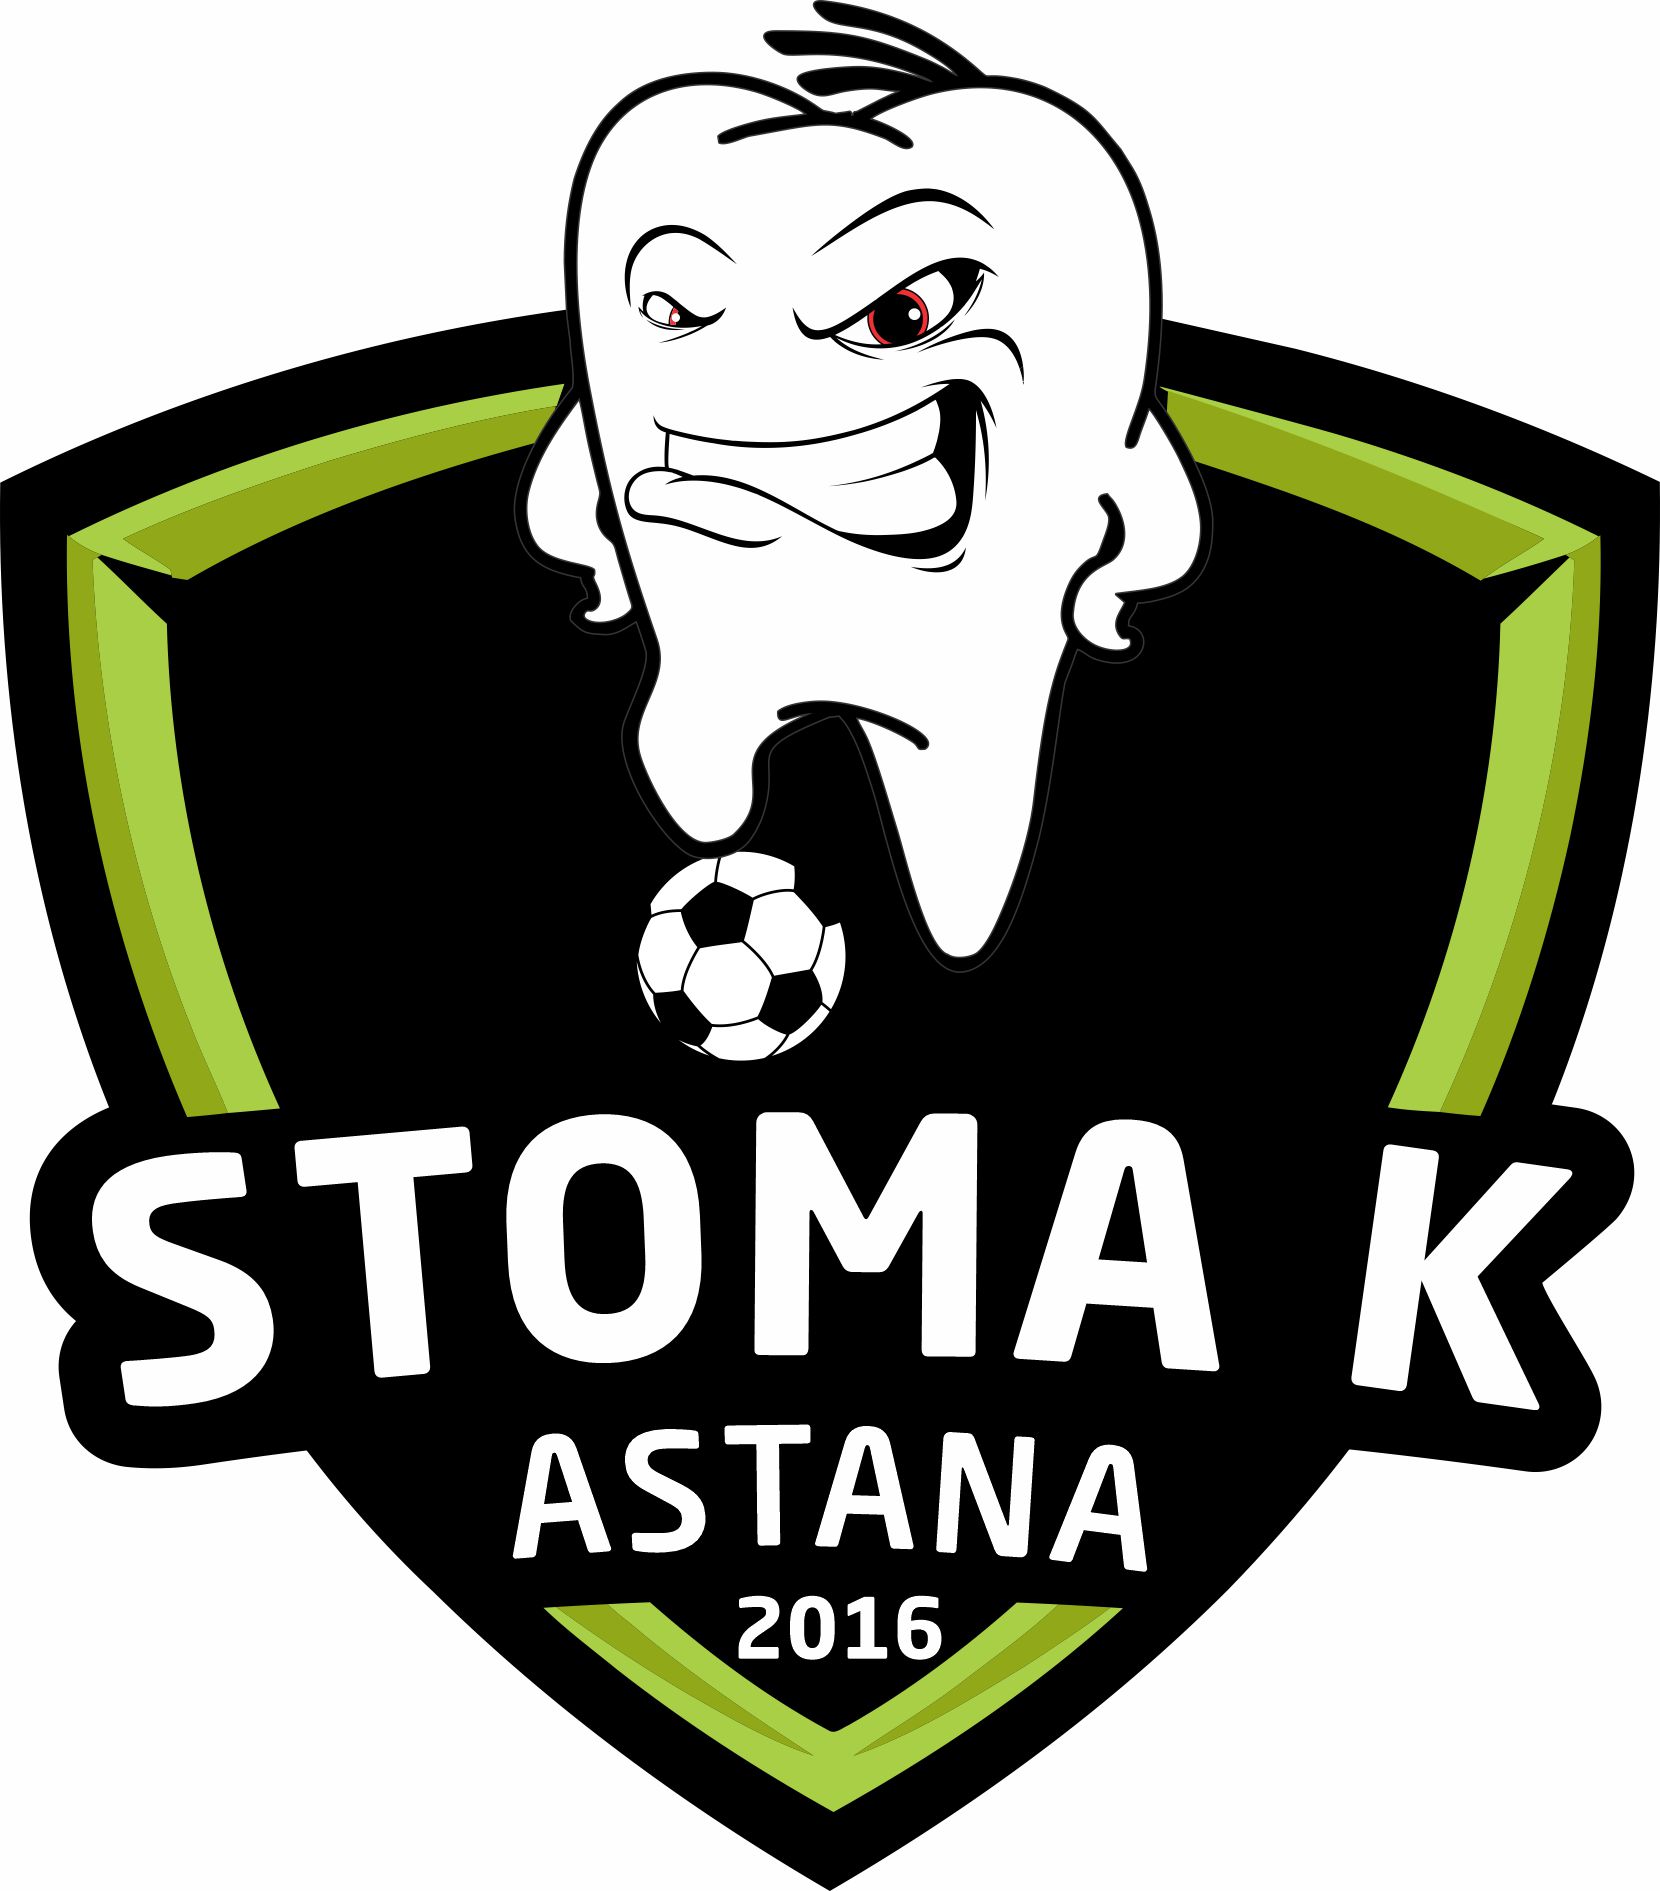  @Stomak.astana